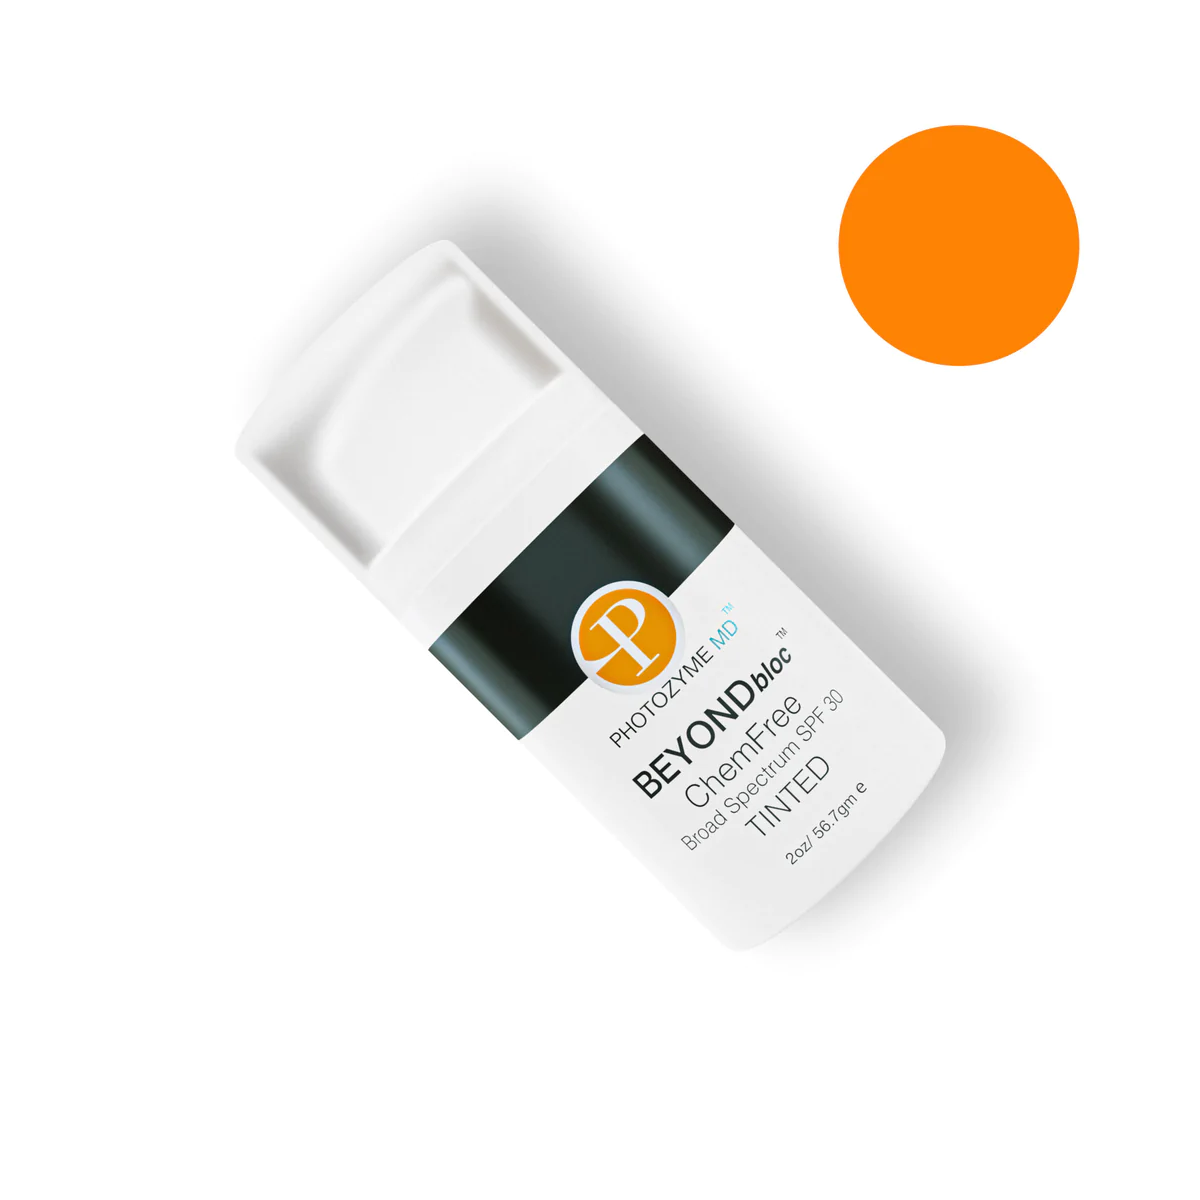 Photozyme BEYONDBloc Tinted Sunscreen SPF 30 - Retail